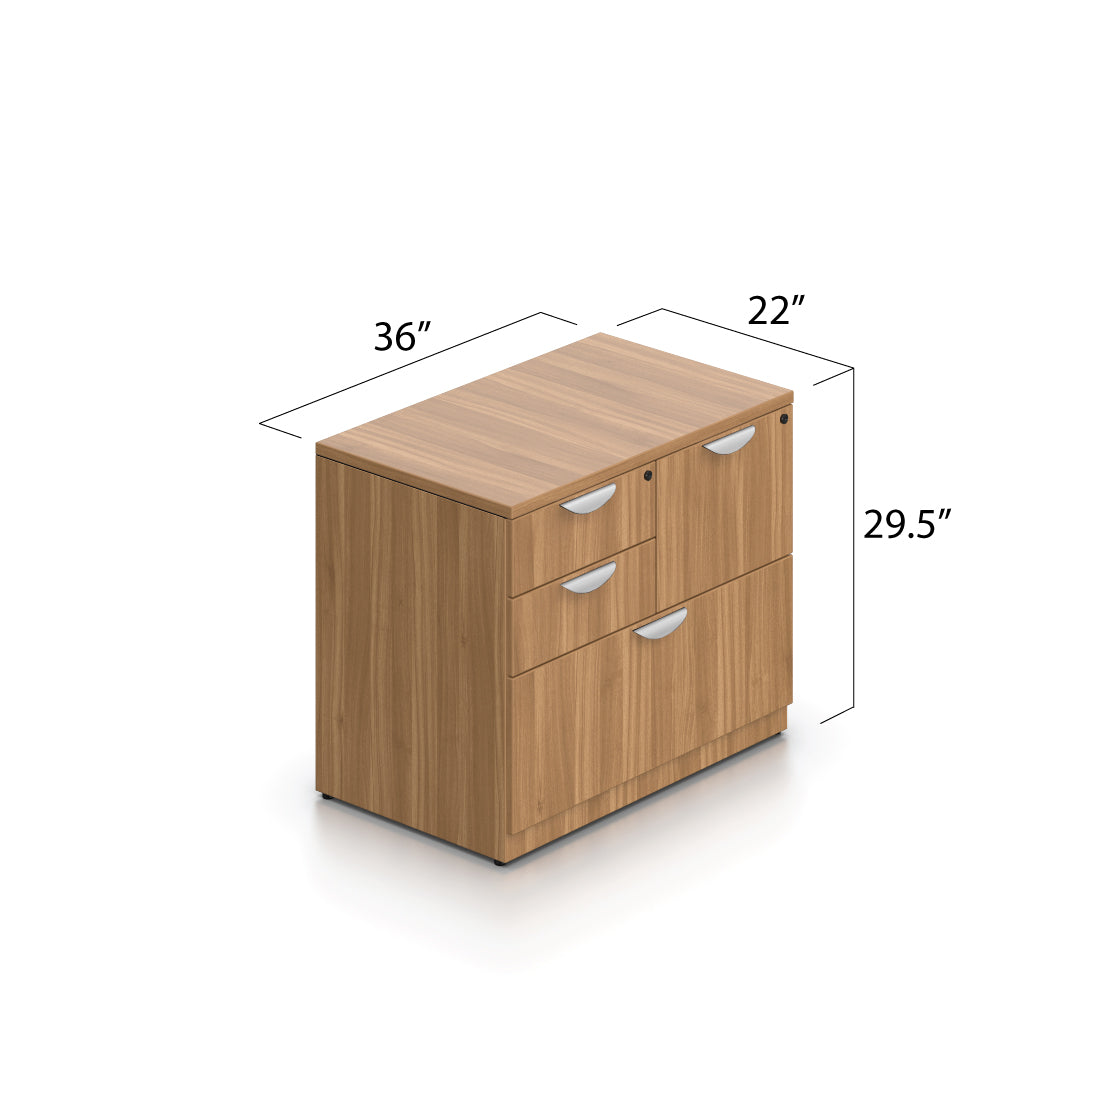 Mixed Storage Cabinet 36" x 22" - Kainosbuy.com